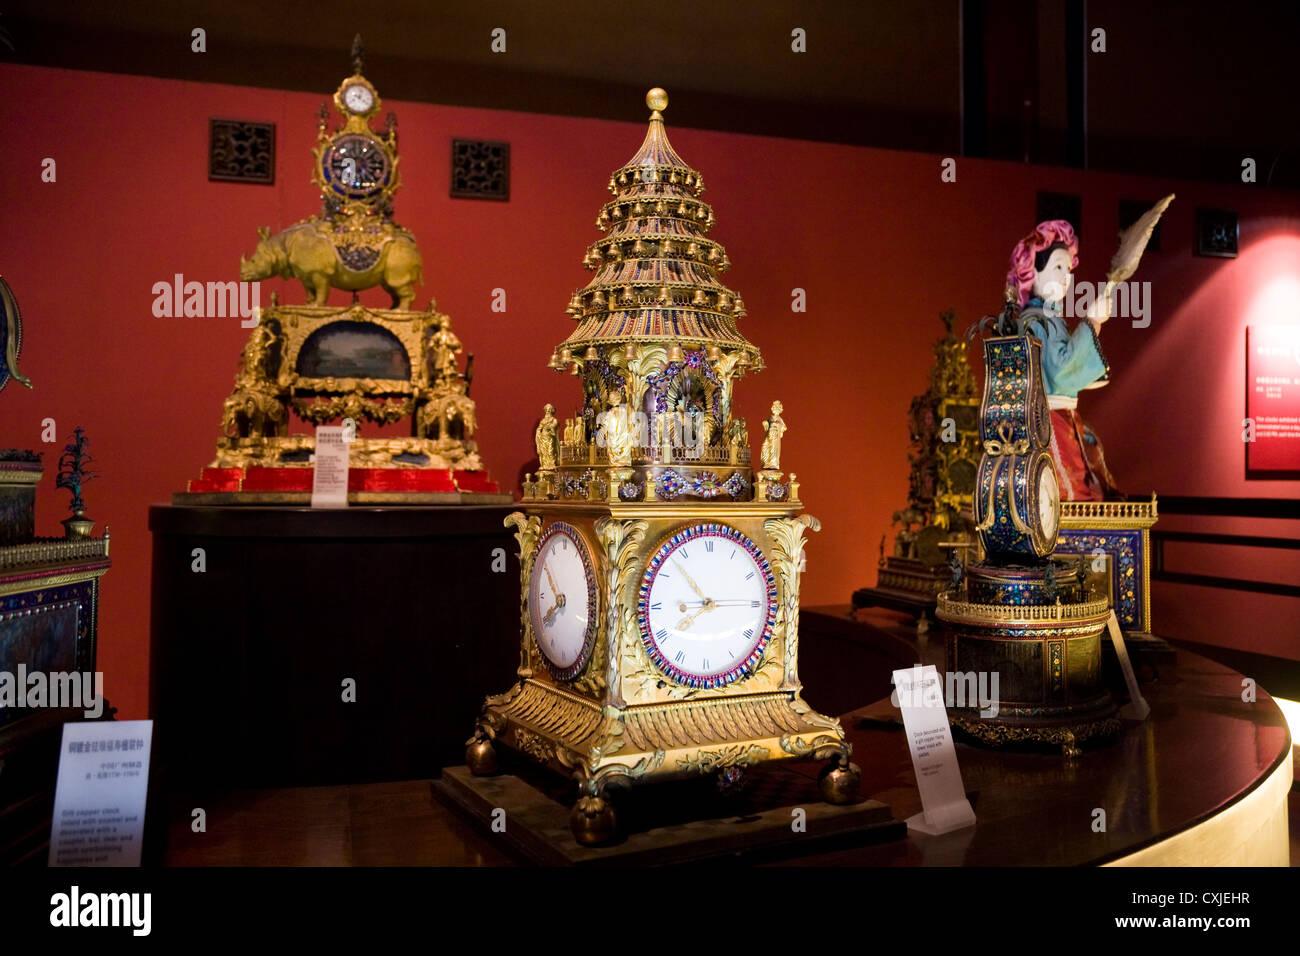 Rare clock / clocks in the clock museum at Palace Museum, The Forbidden City. Beijing. China. Stock Photo